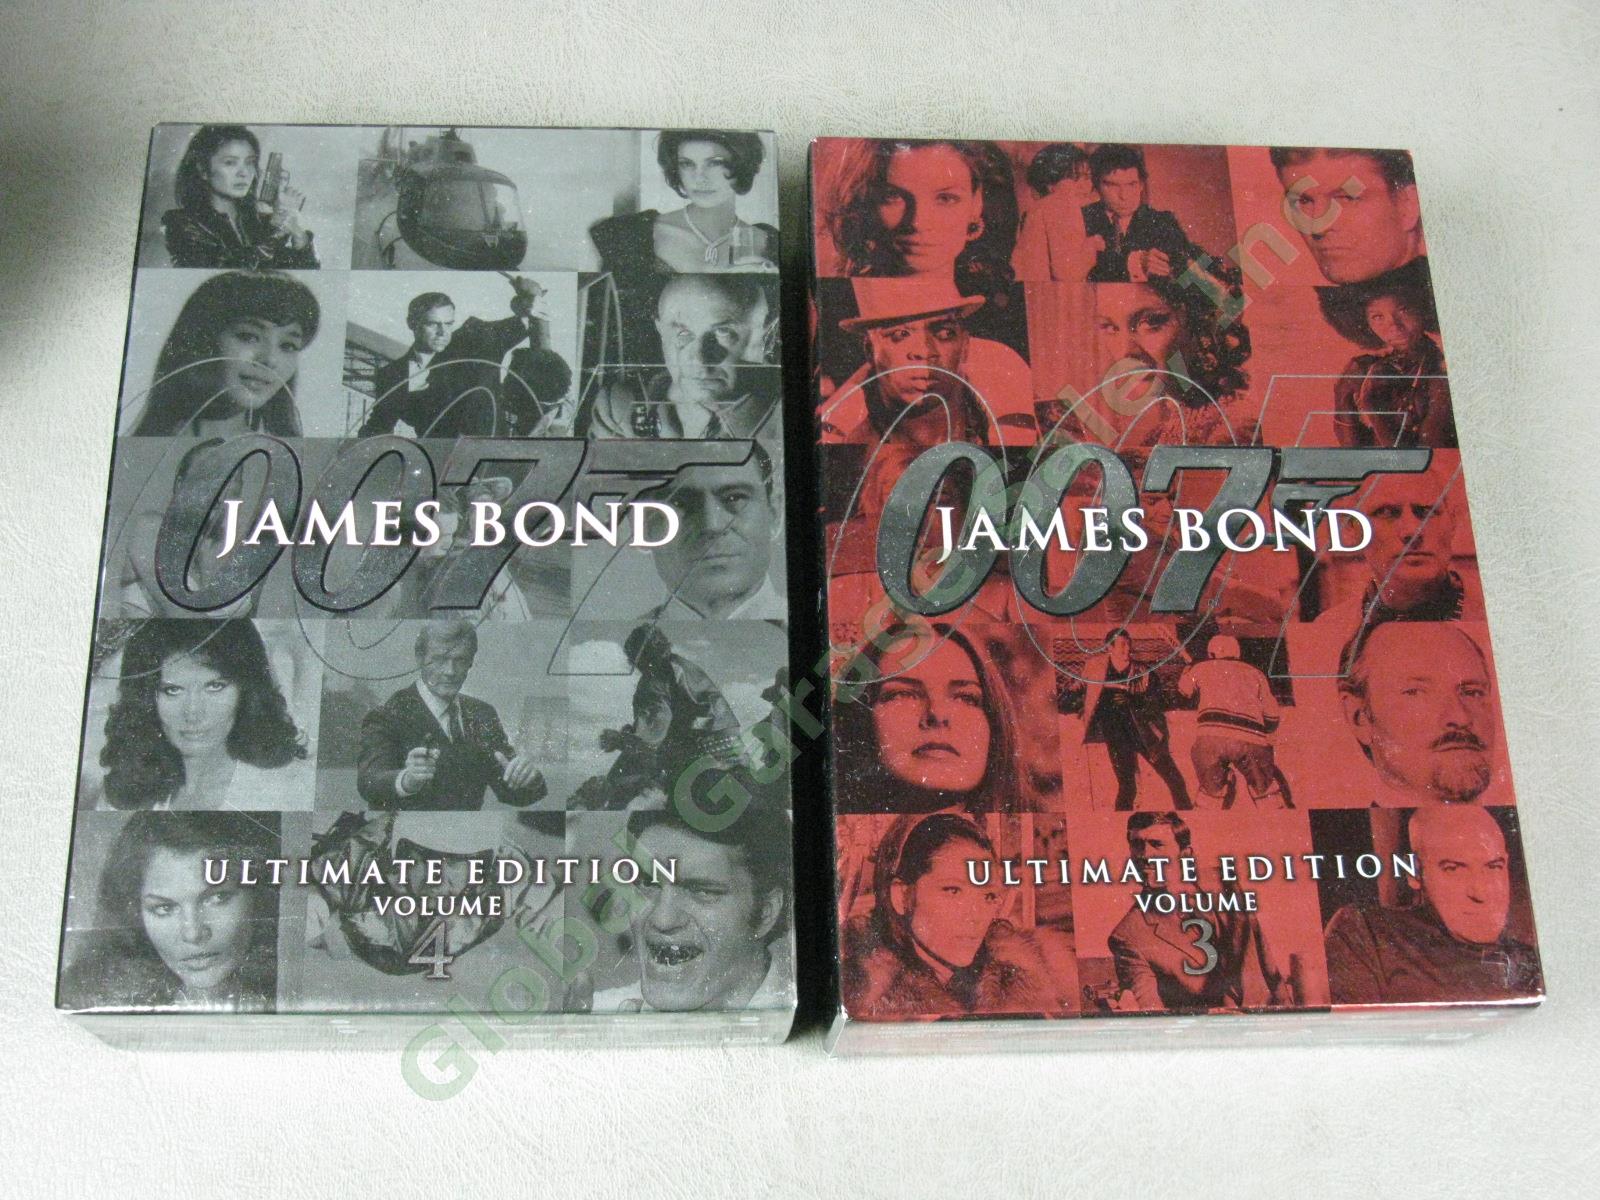 007 James Bond 46-DVD Collection Lot Ultimate Edition Box Sets Volume 1 2 3 4 NR 2